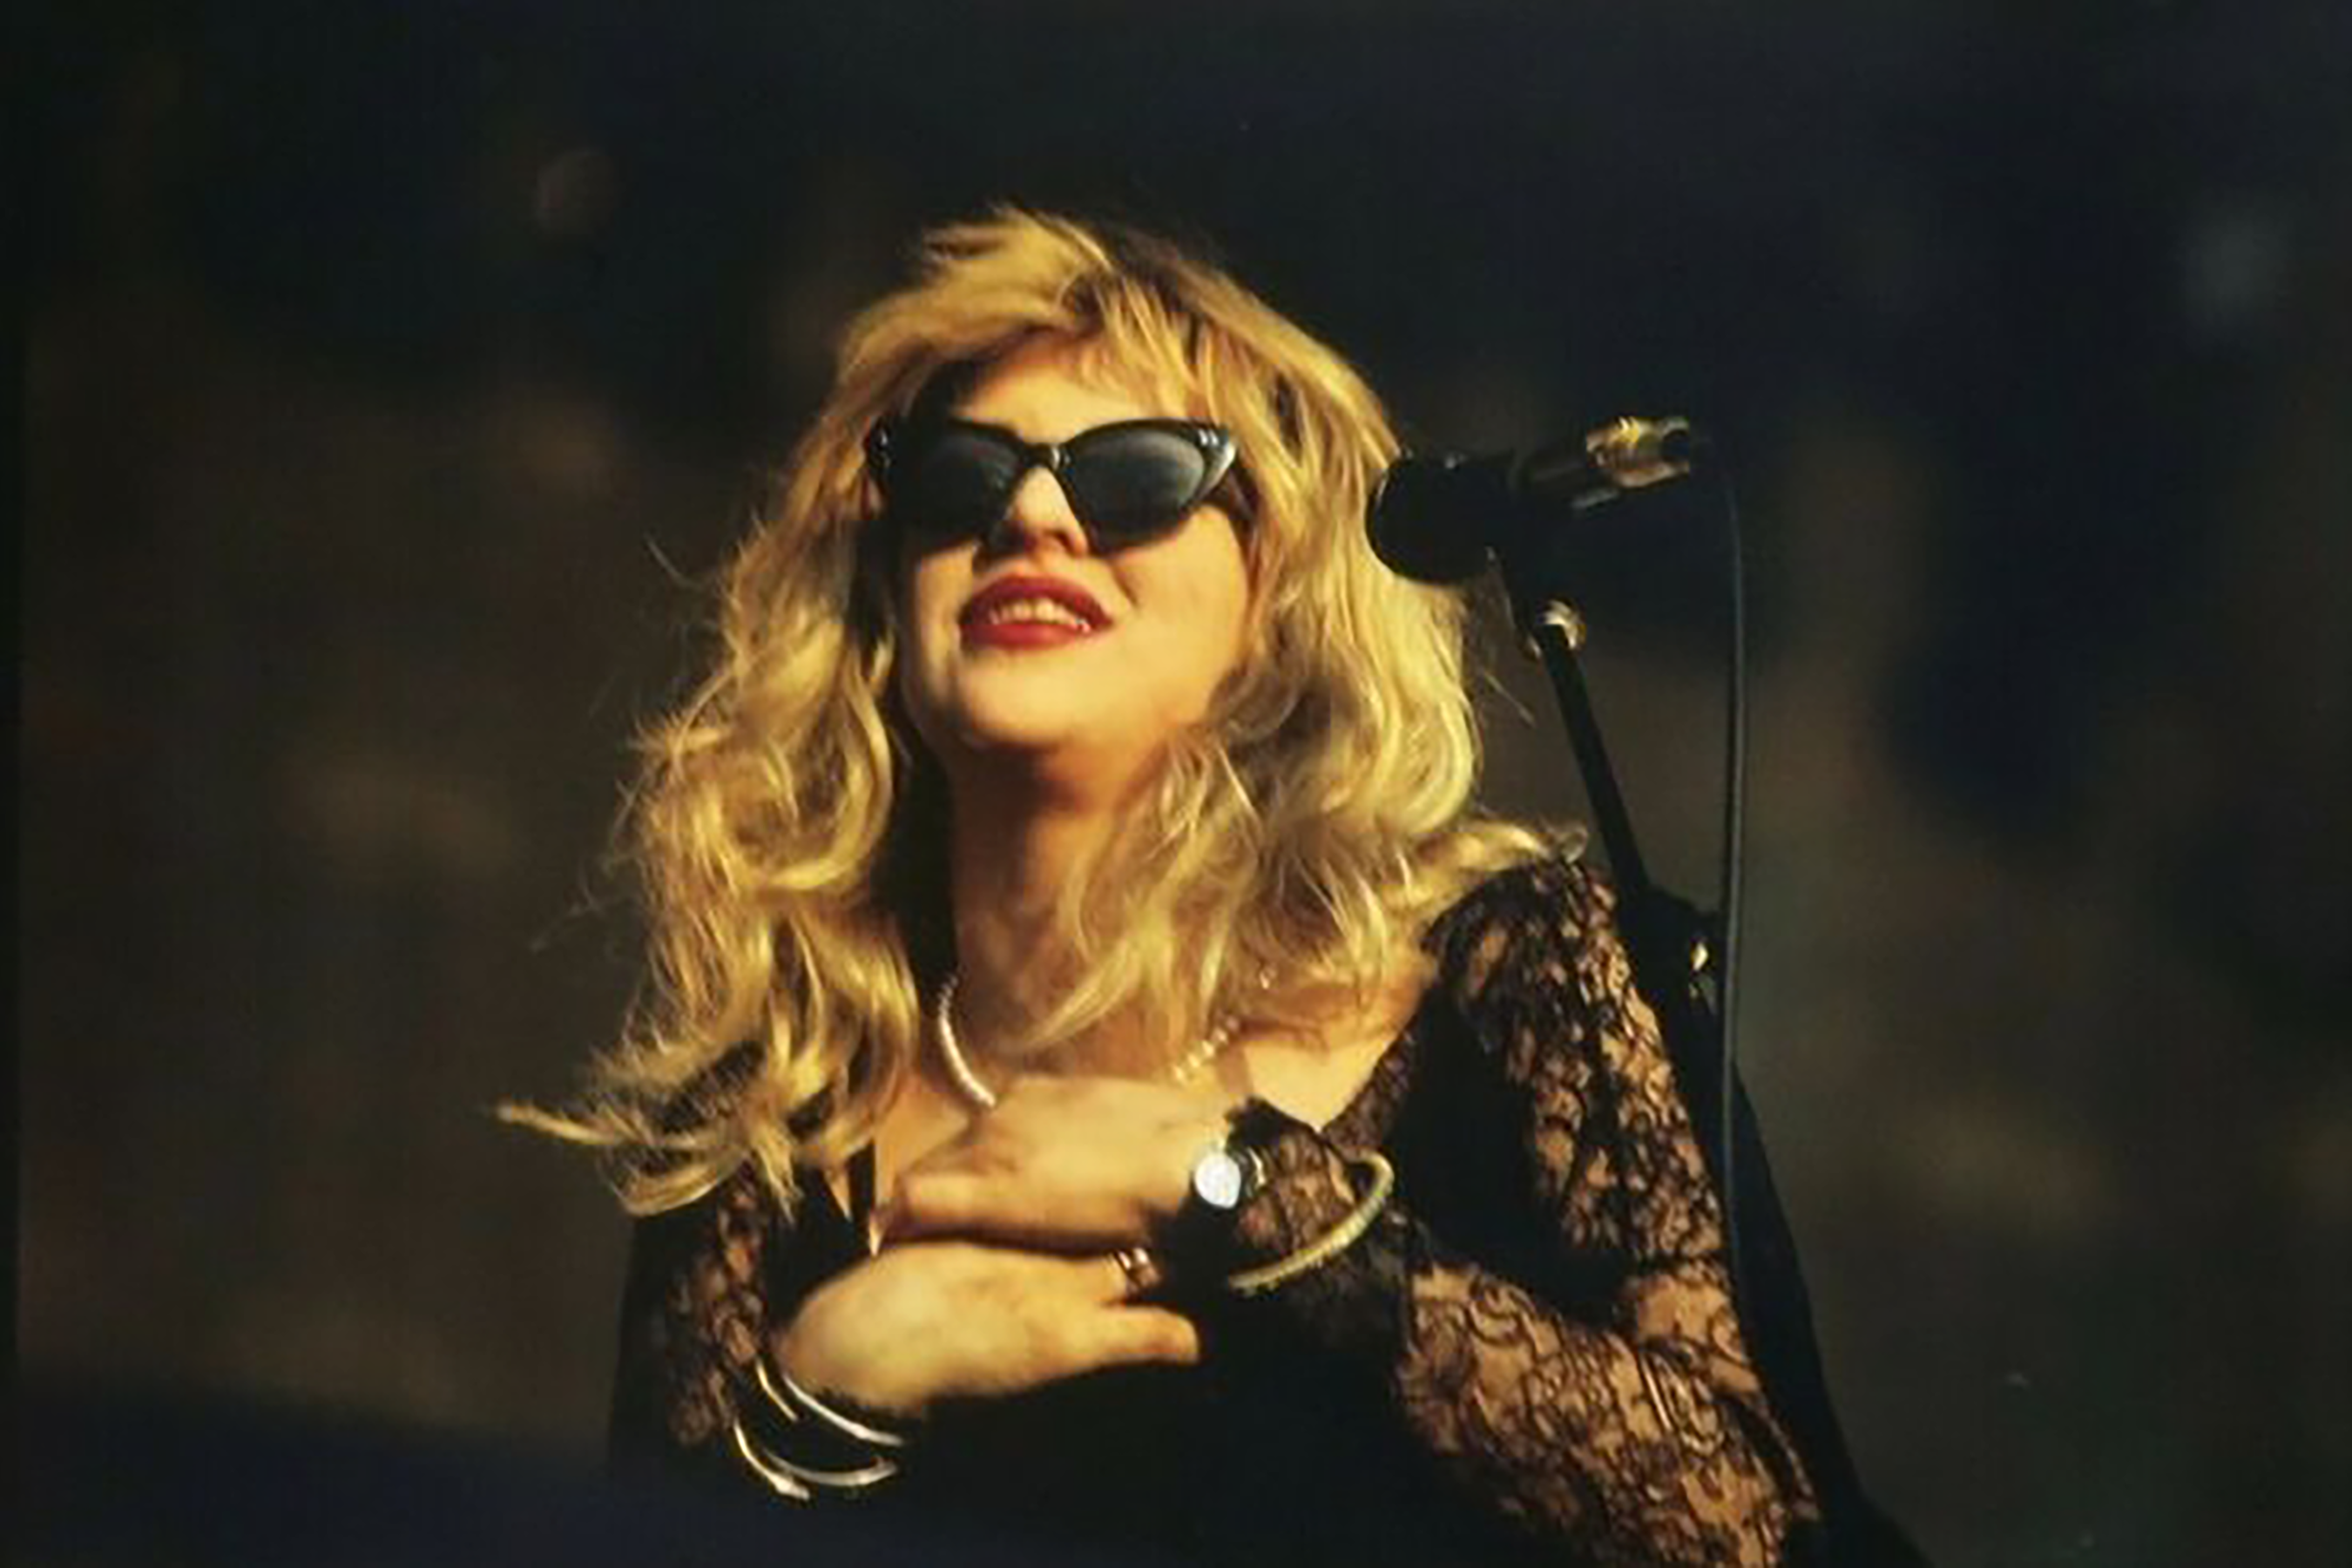 Courtney Love wearing black cat eye sunglasses